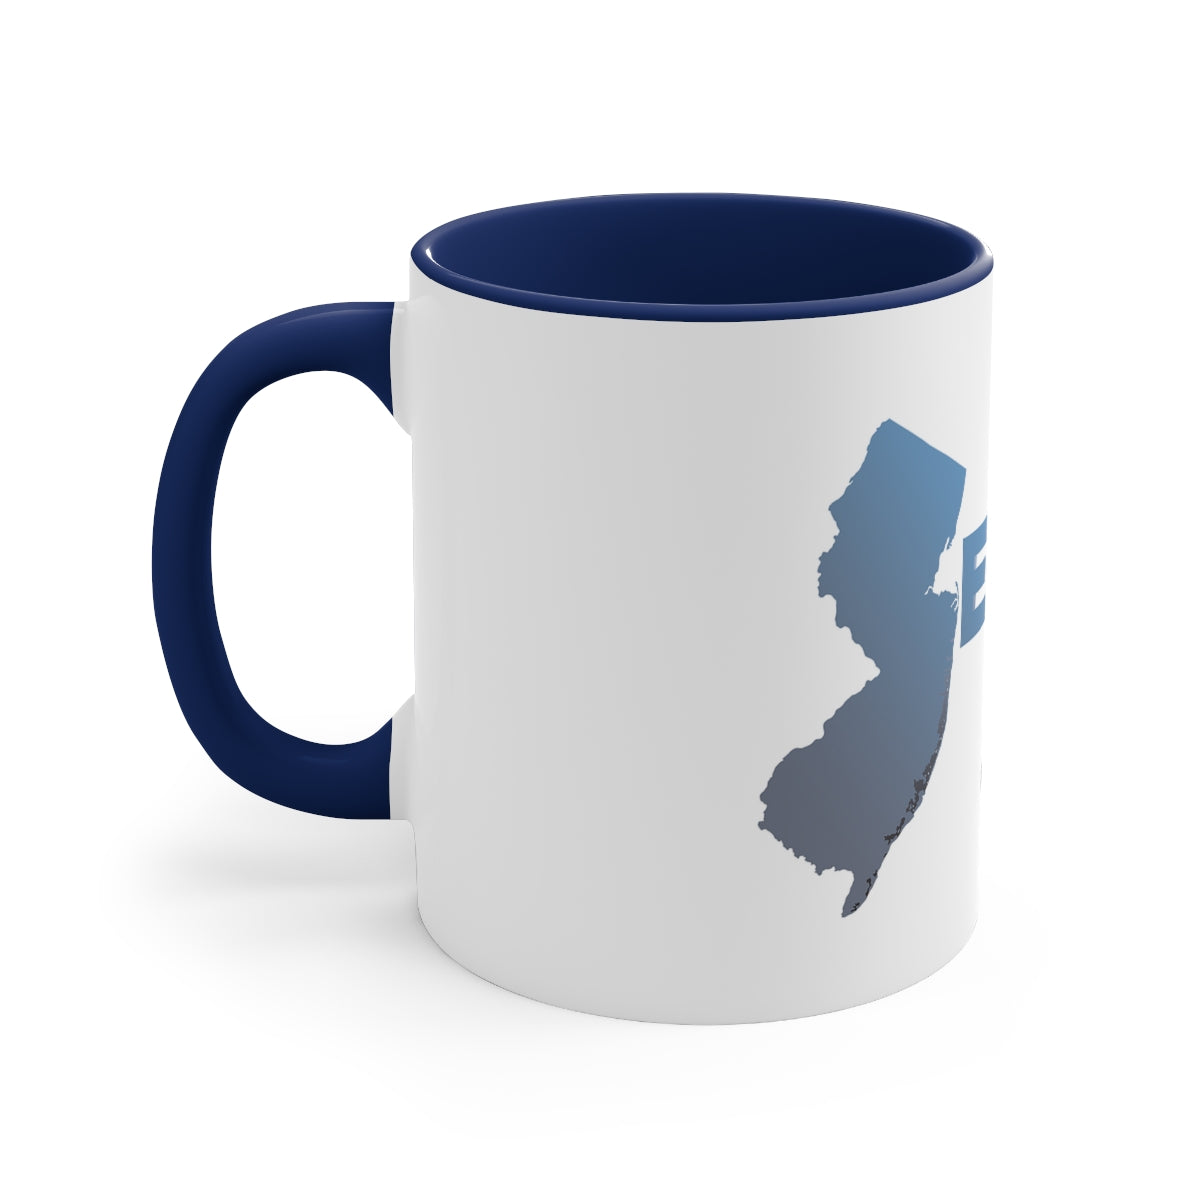 Jersey Born - Accent Coffee Mug, 11oz